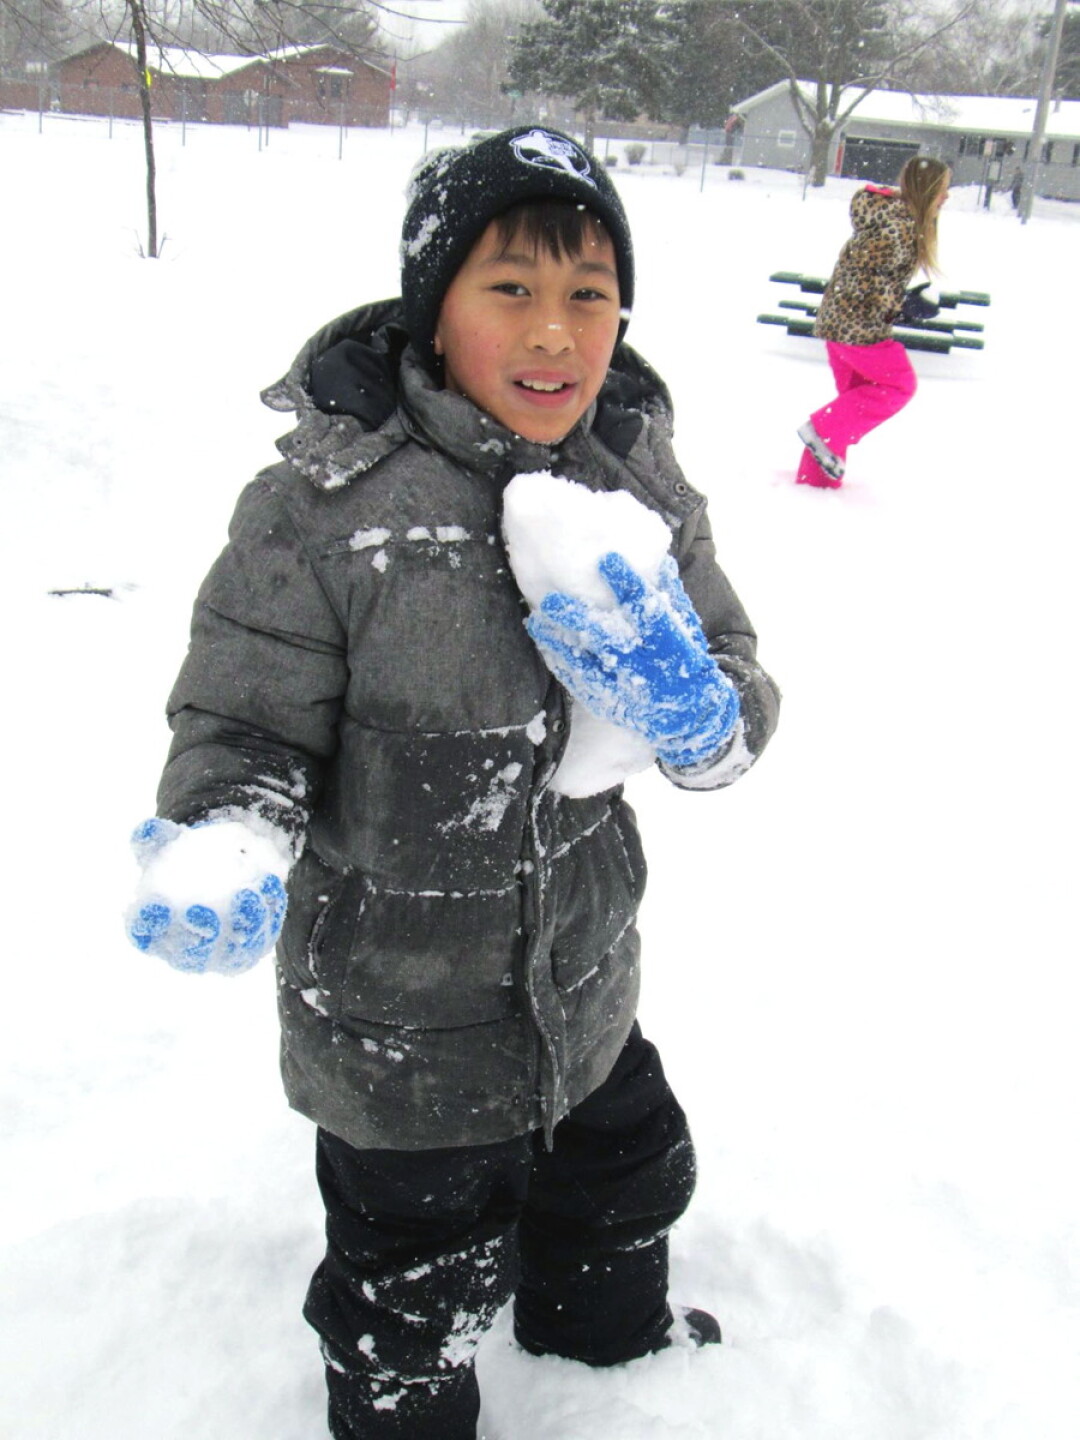 winter fun is returning for boys and girls in menomonie.